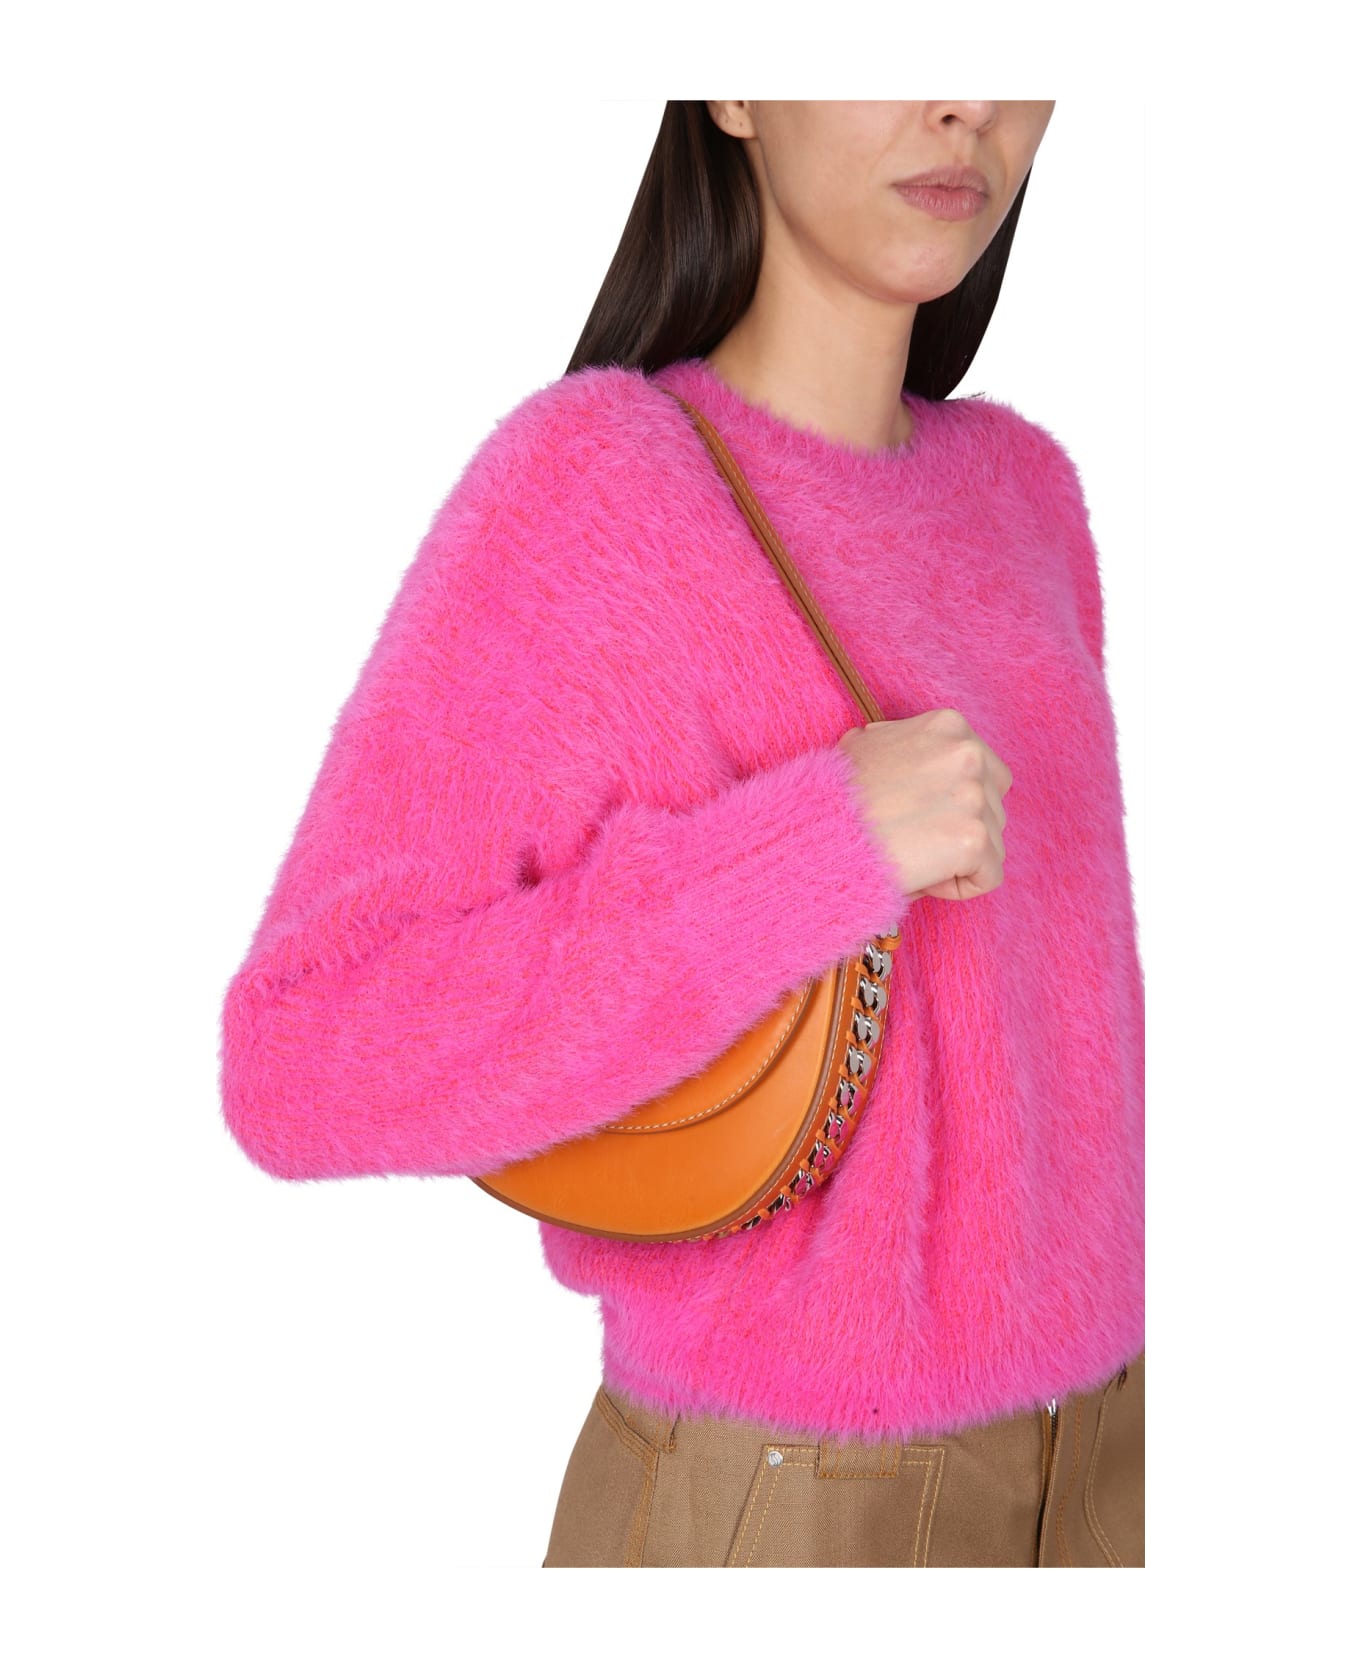 Stella McCartney Wool Blend Sweater - FUCSIA ニットウェア